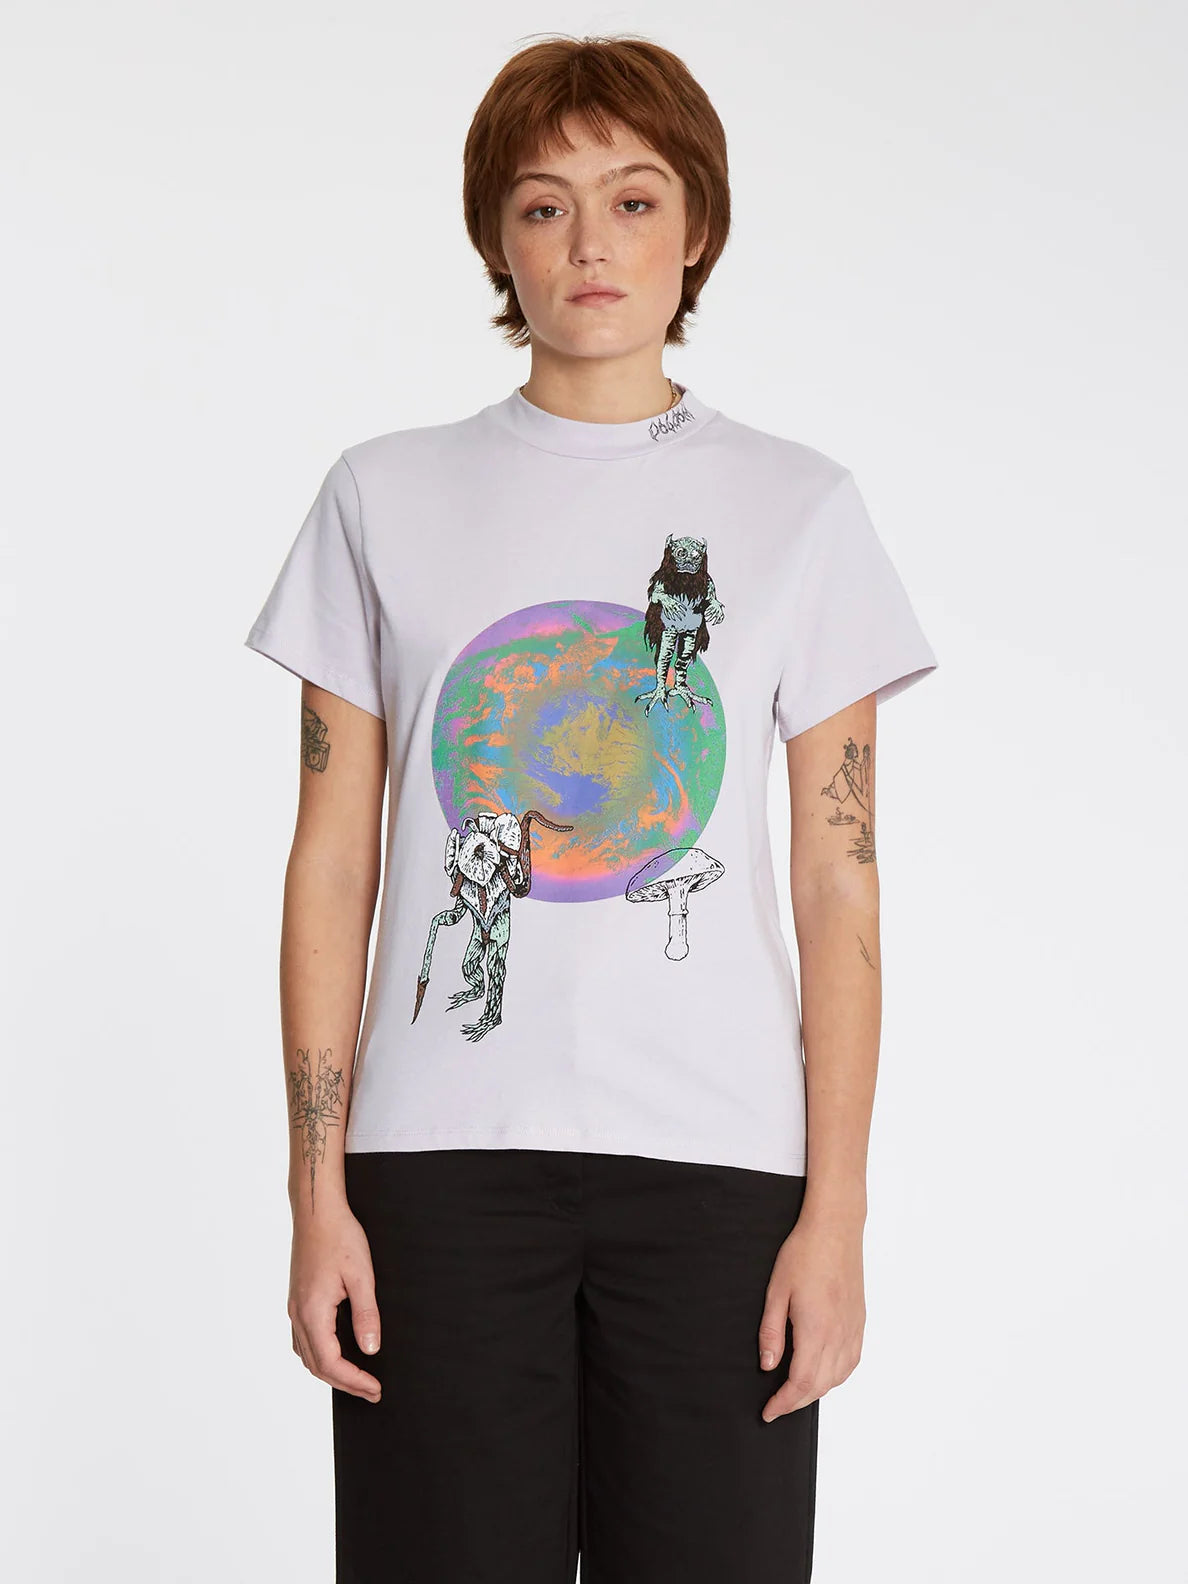 Volcom Chrissie Abbott x French Lavender Girl T-Shirt